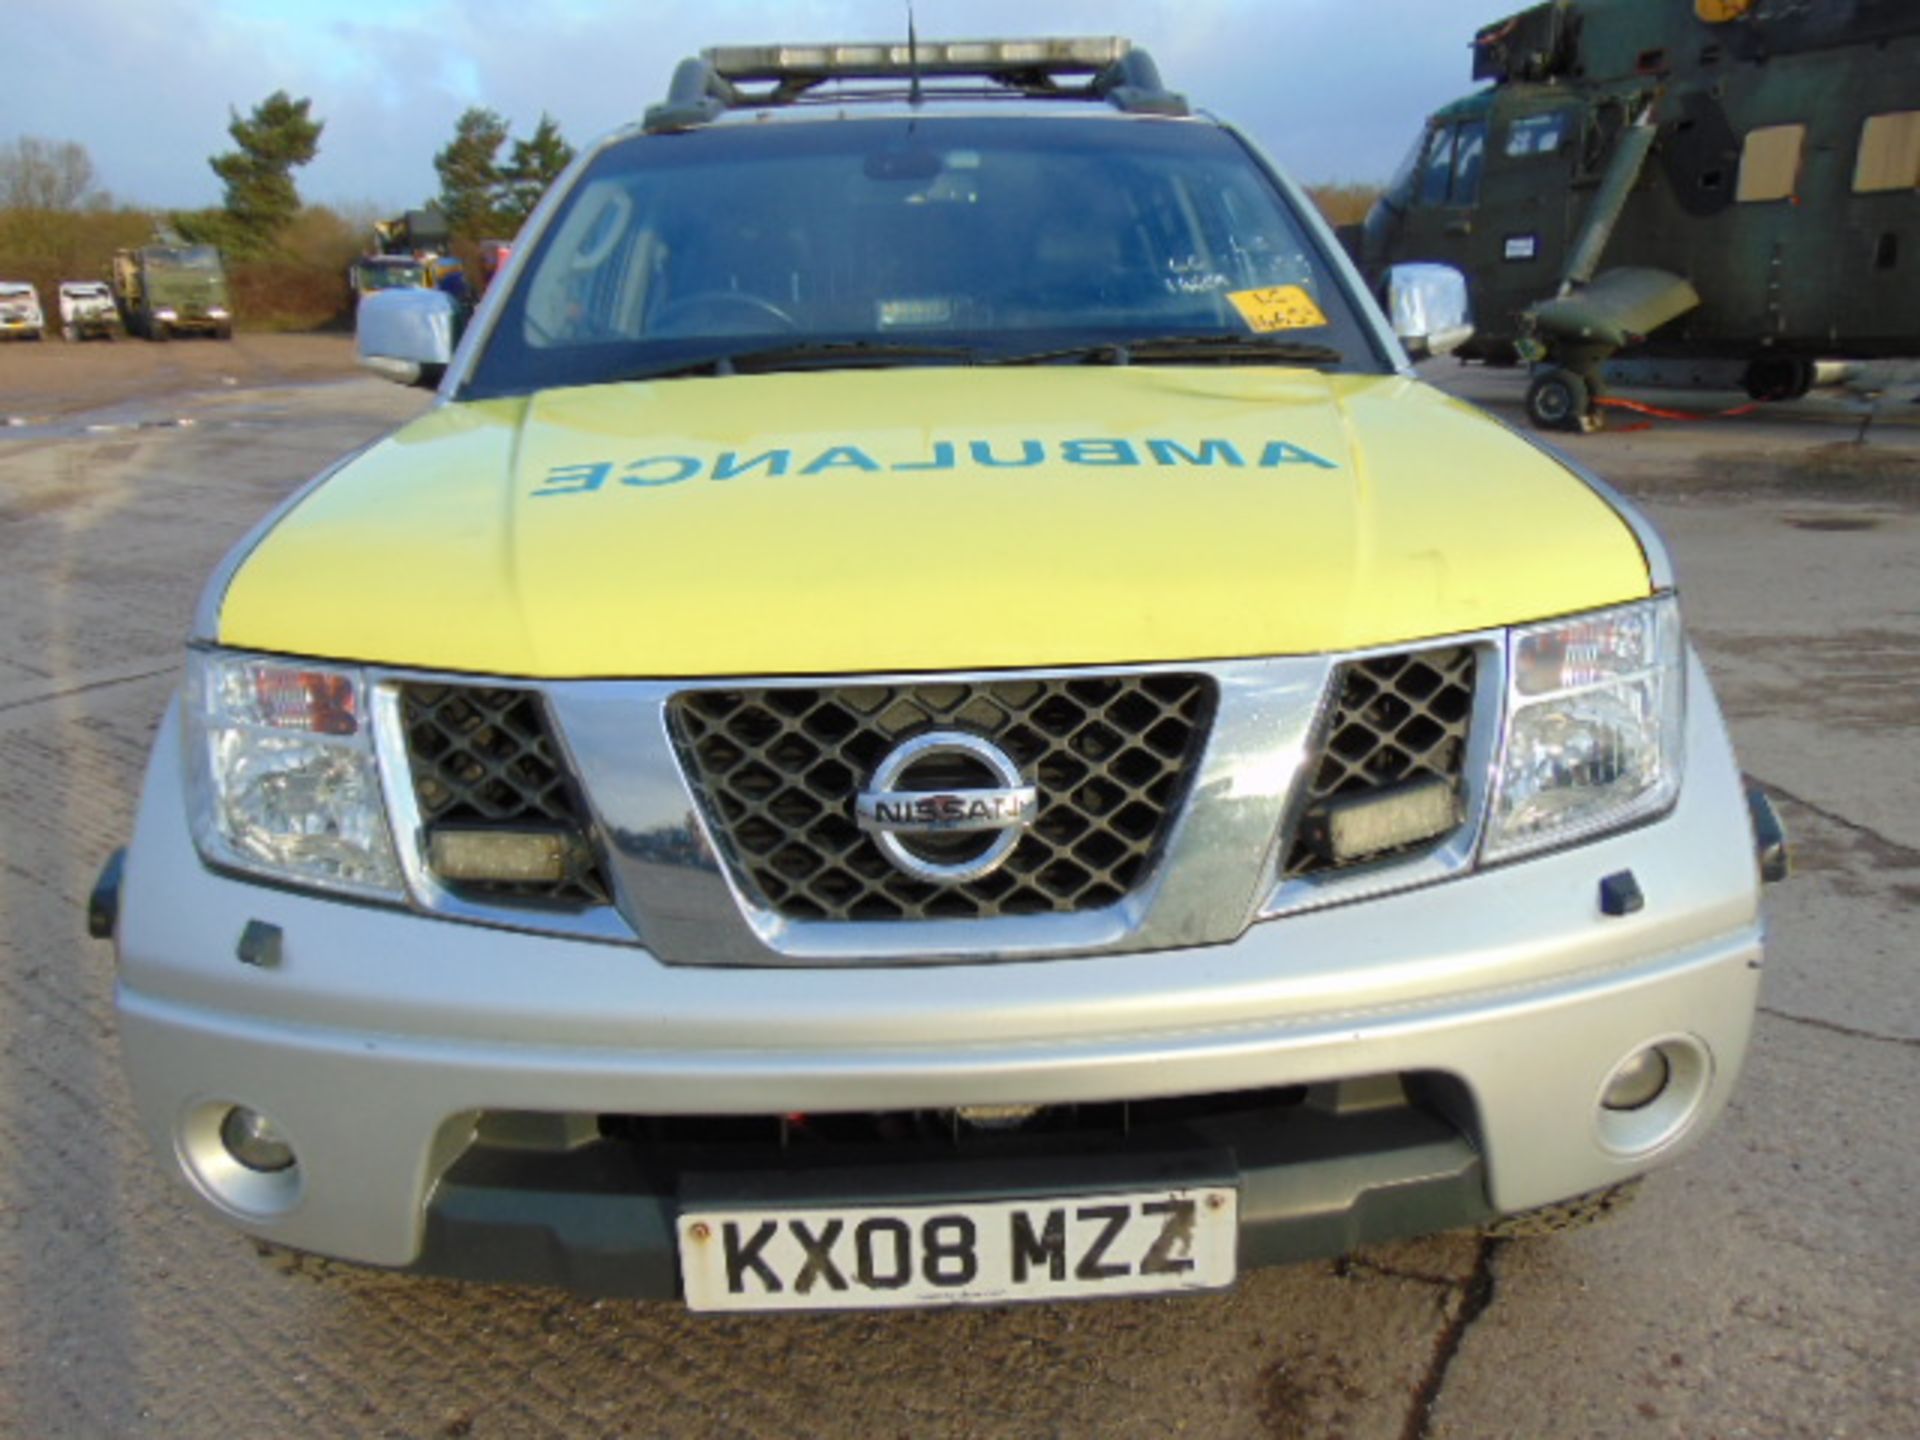 2008 Nissan Navara Aventura Double Cab 2.5 dCi Incident Response Vehicle - Image 2 of 24